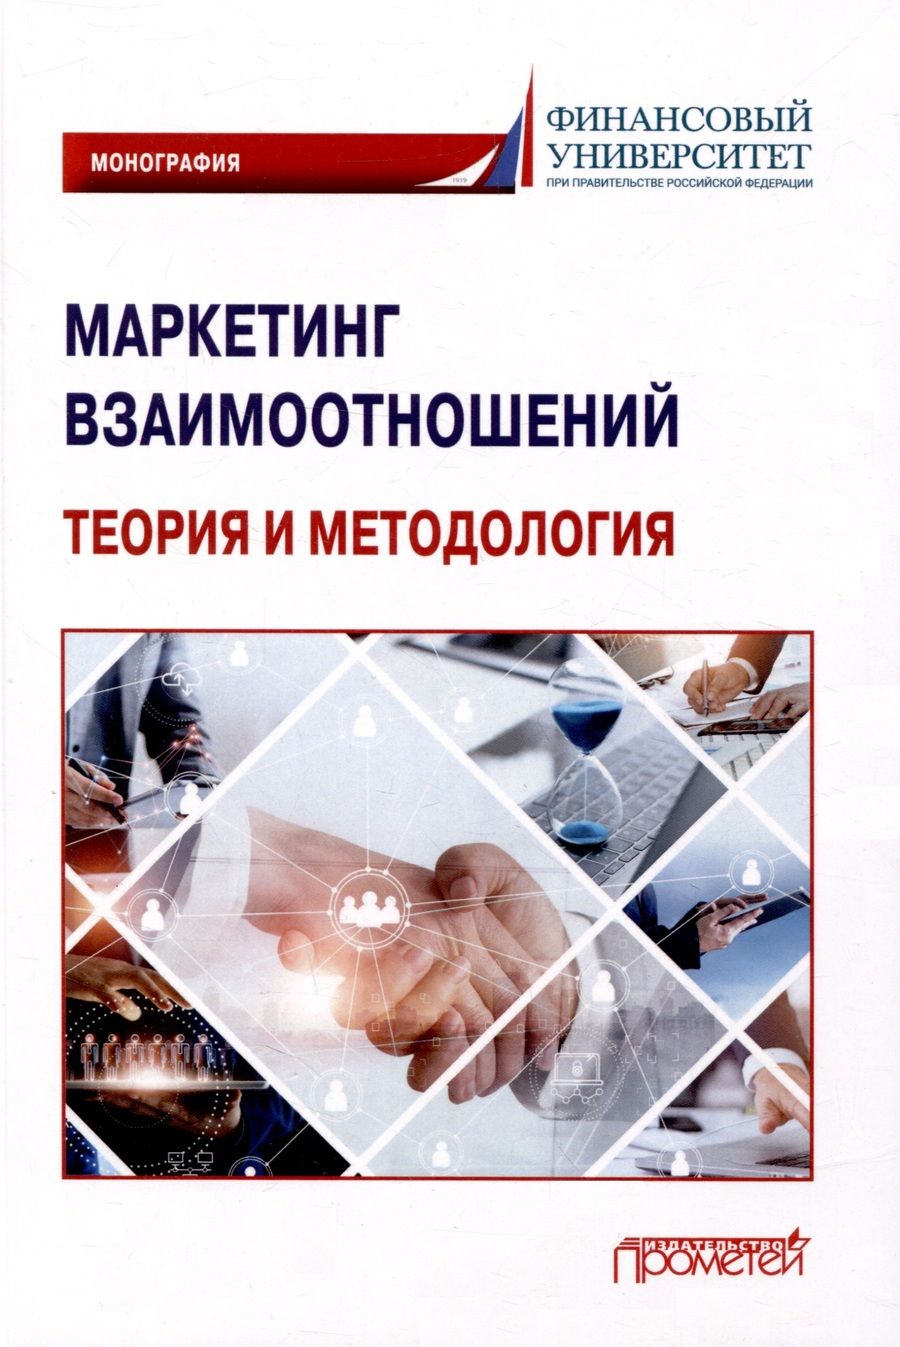 Обложка книги "Азарова, Фирсова, Балова: Маркетинг взаимоотношений. Теория и методология. Монография"